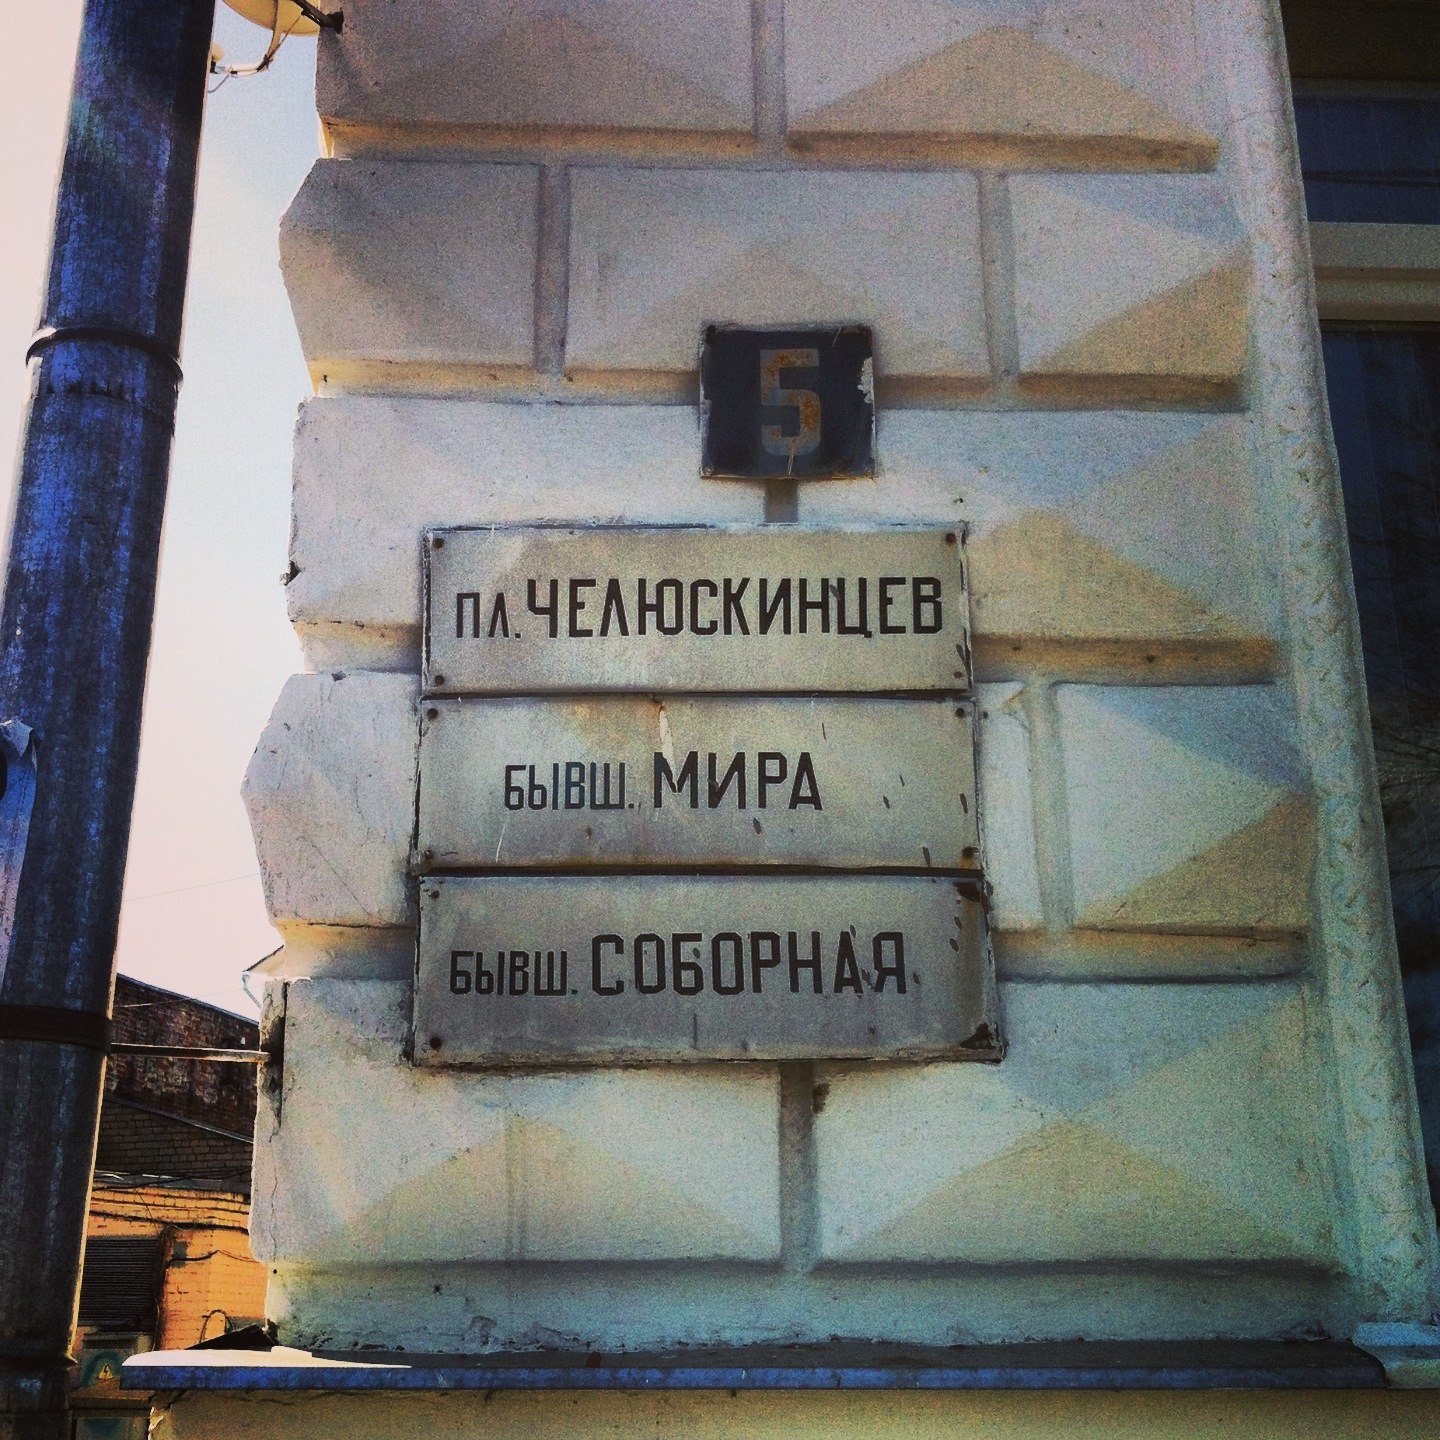 Former - My, Yaroslavl, Naming, The street